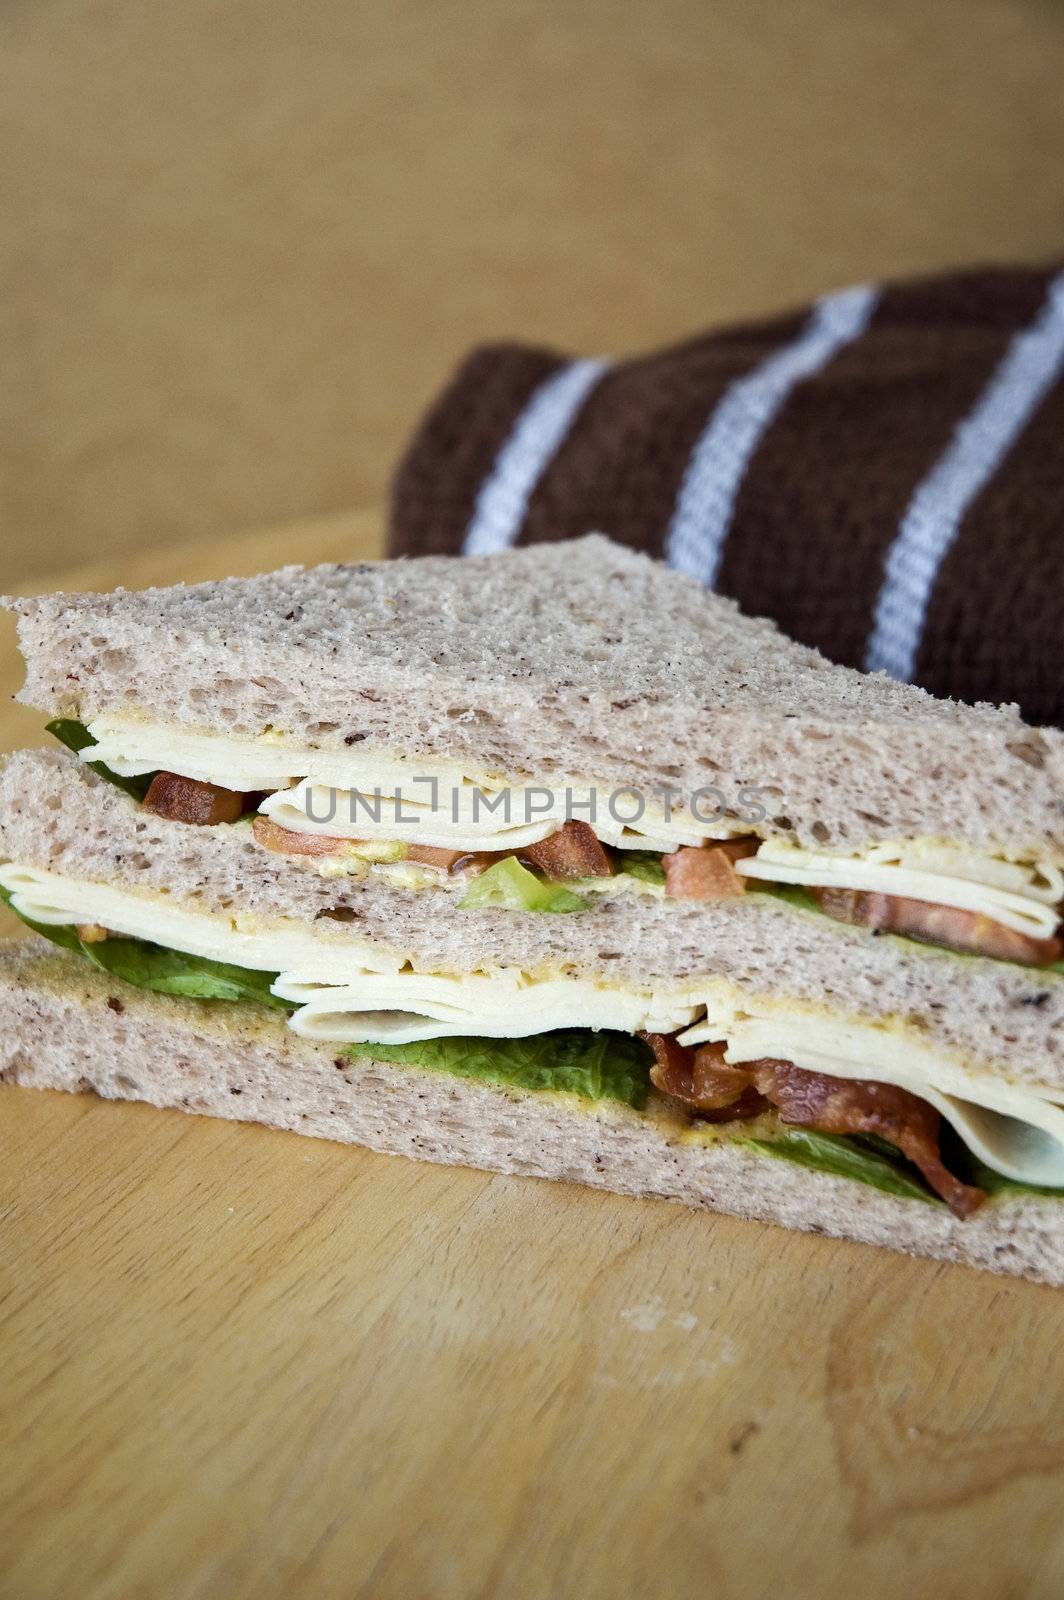 healthy sandwich on wooden table by daniaphoto